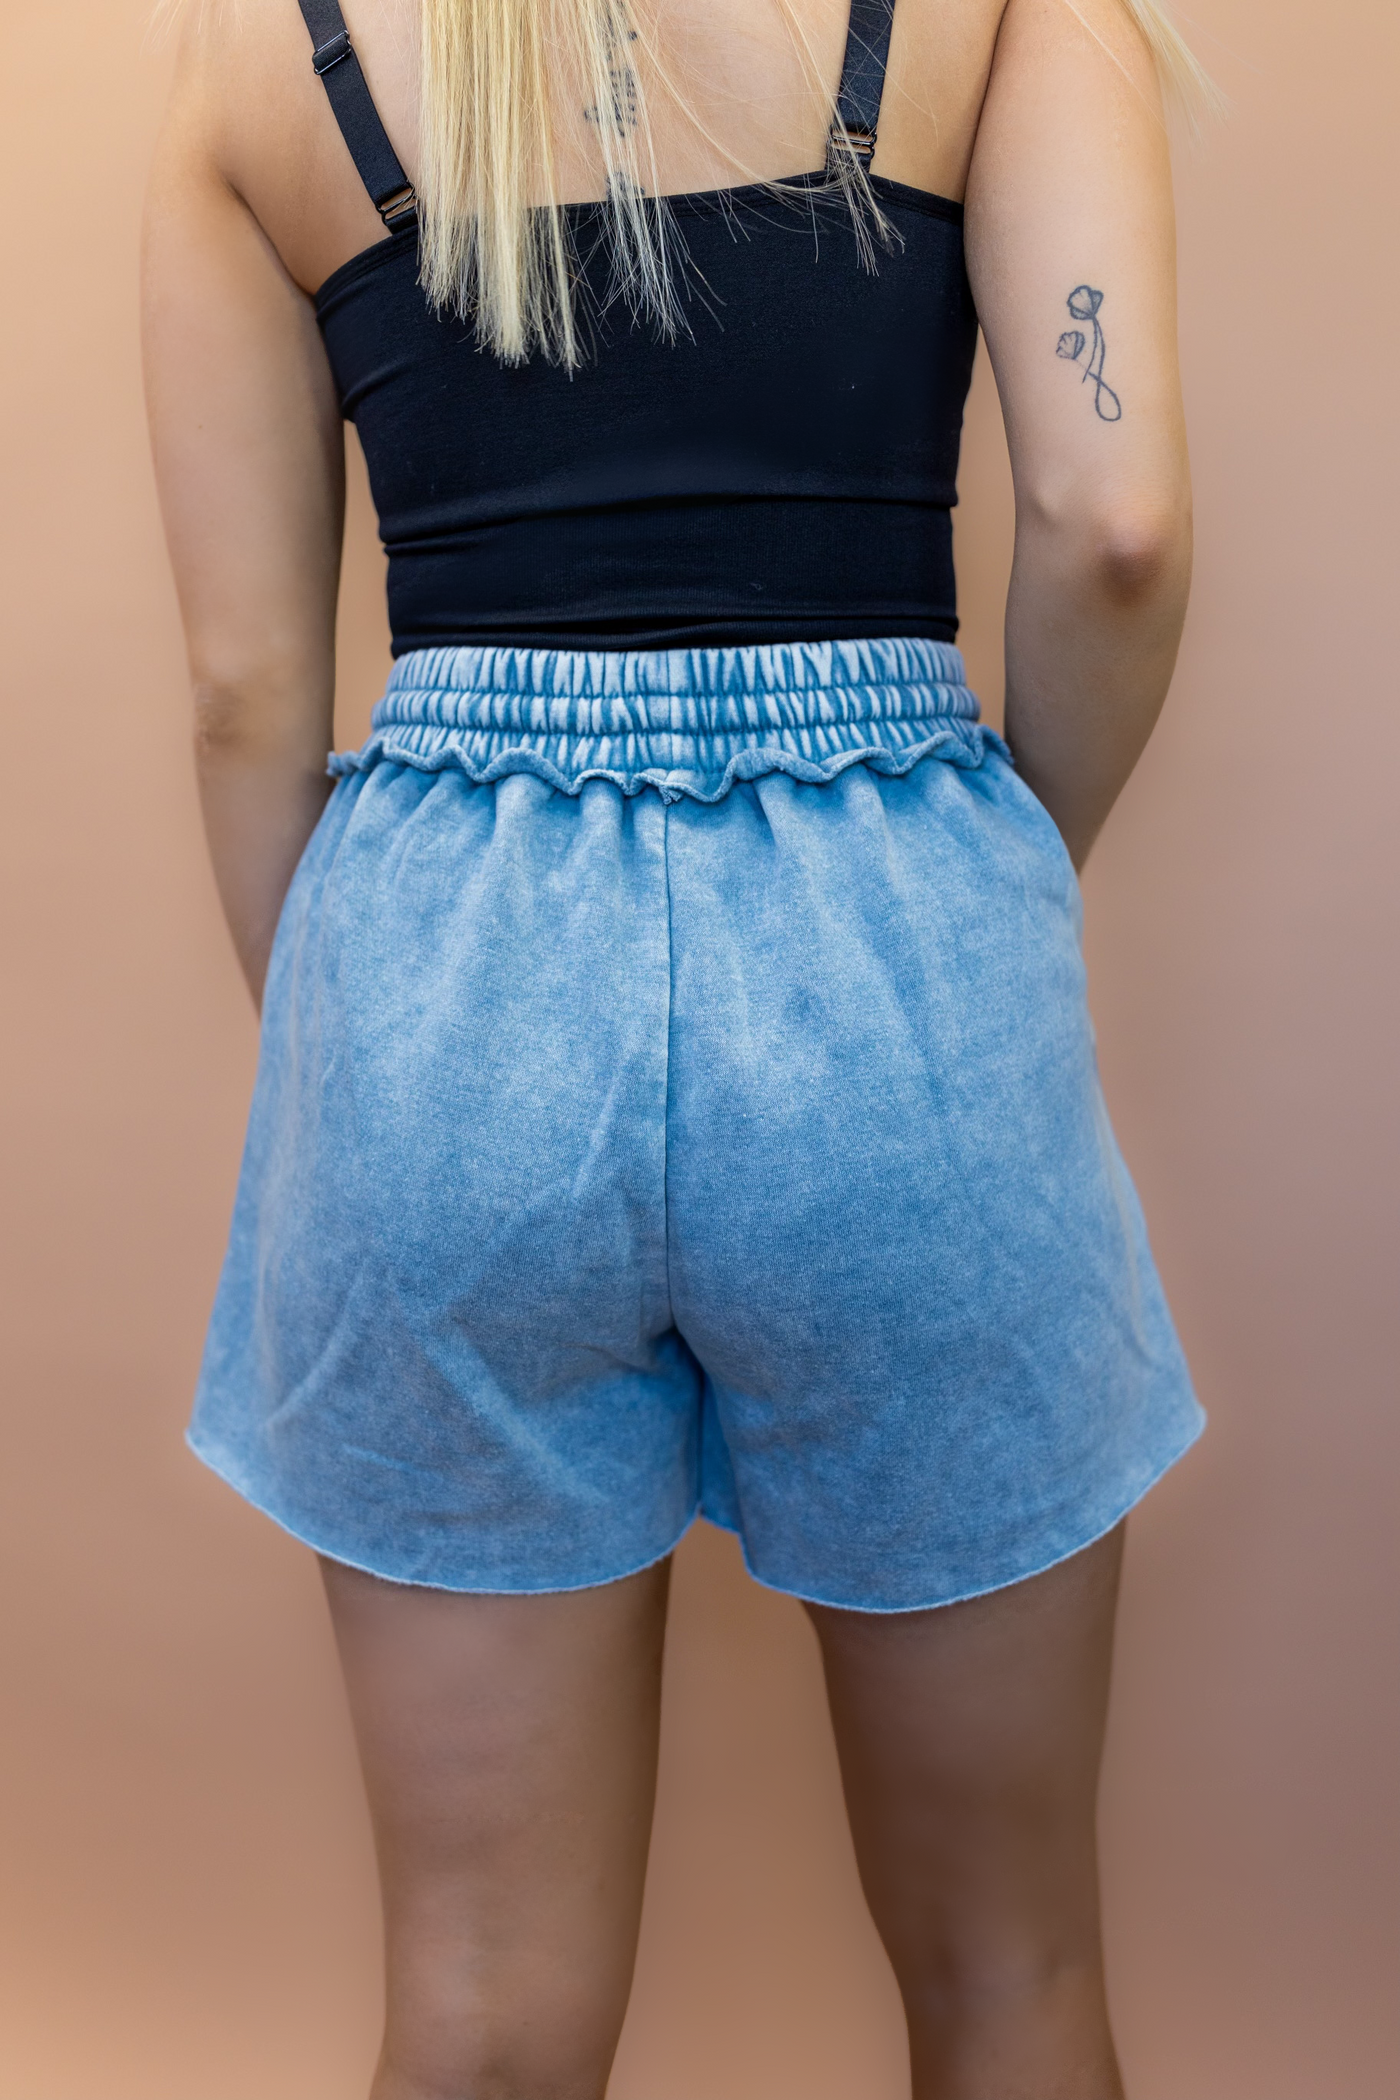 Nora Drawstring Shorts in Blue Grey